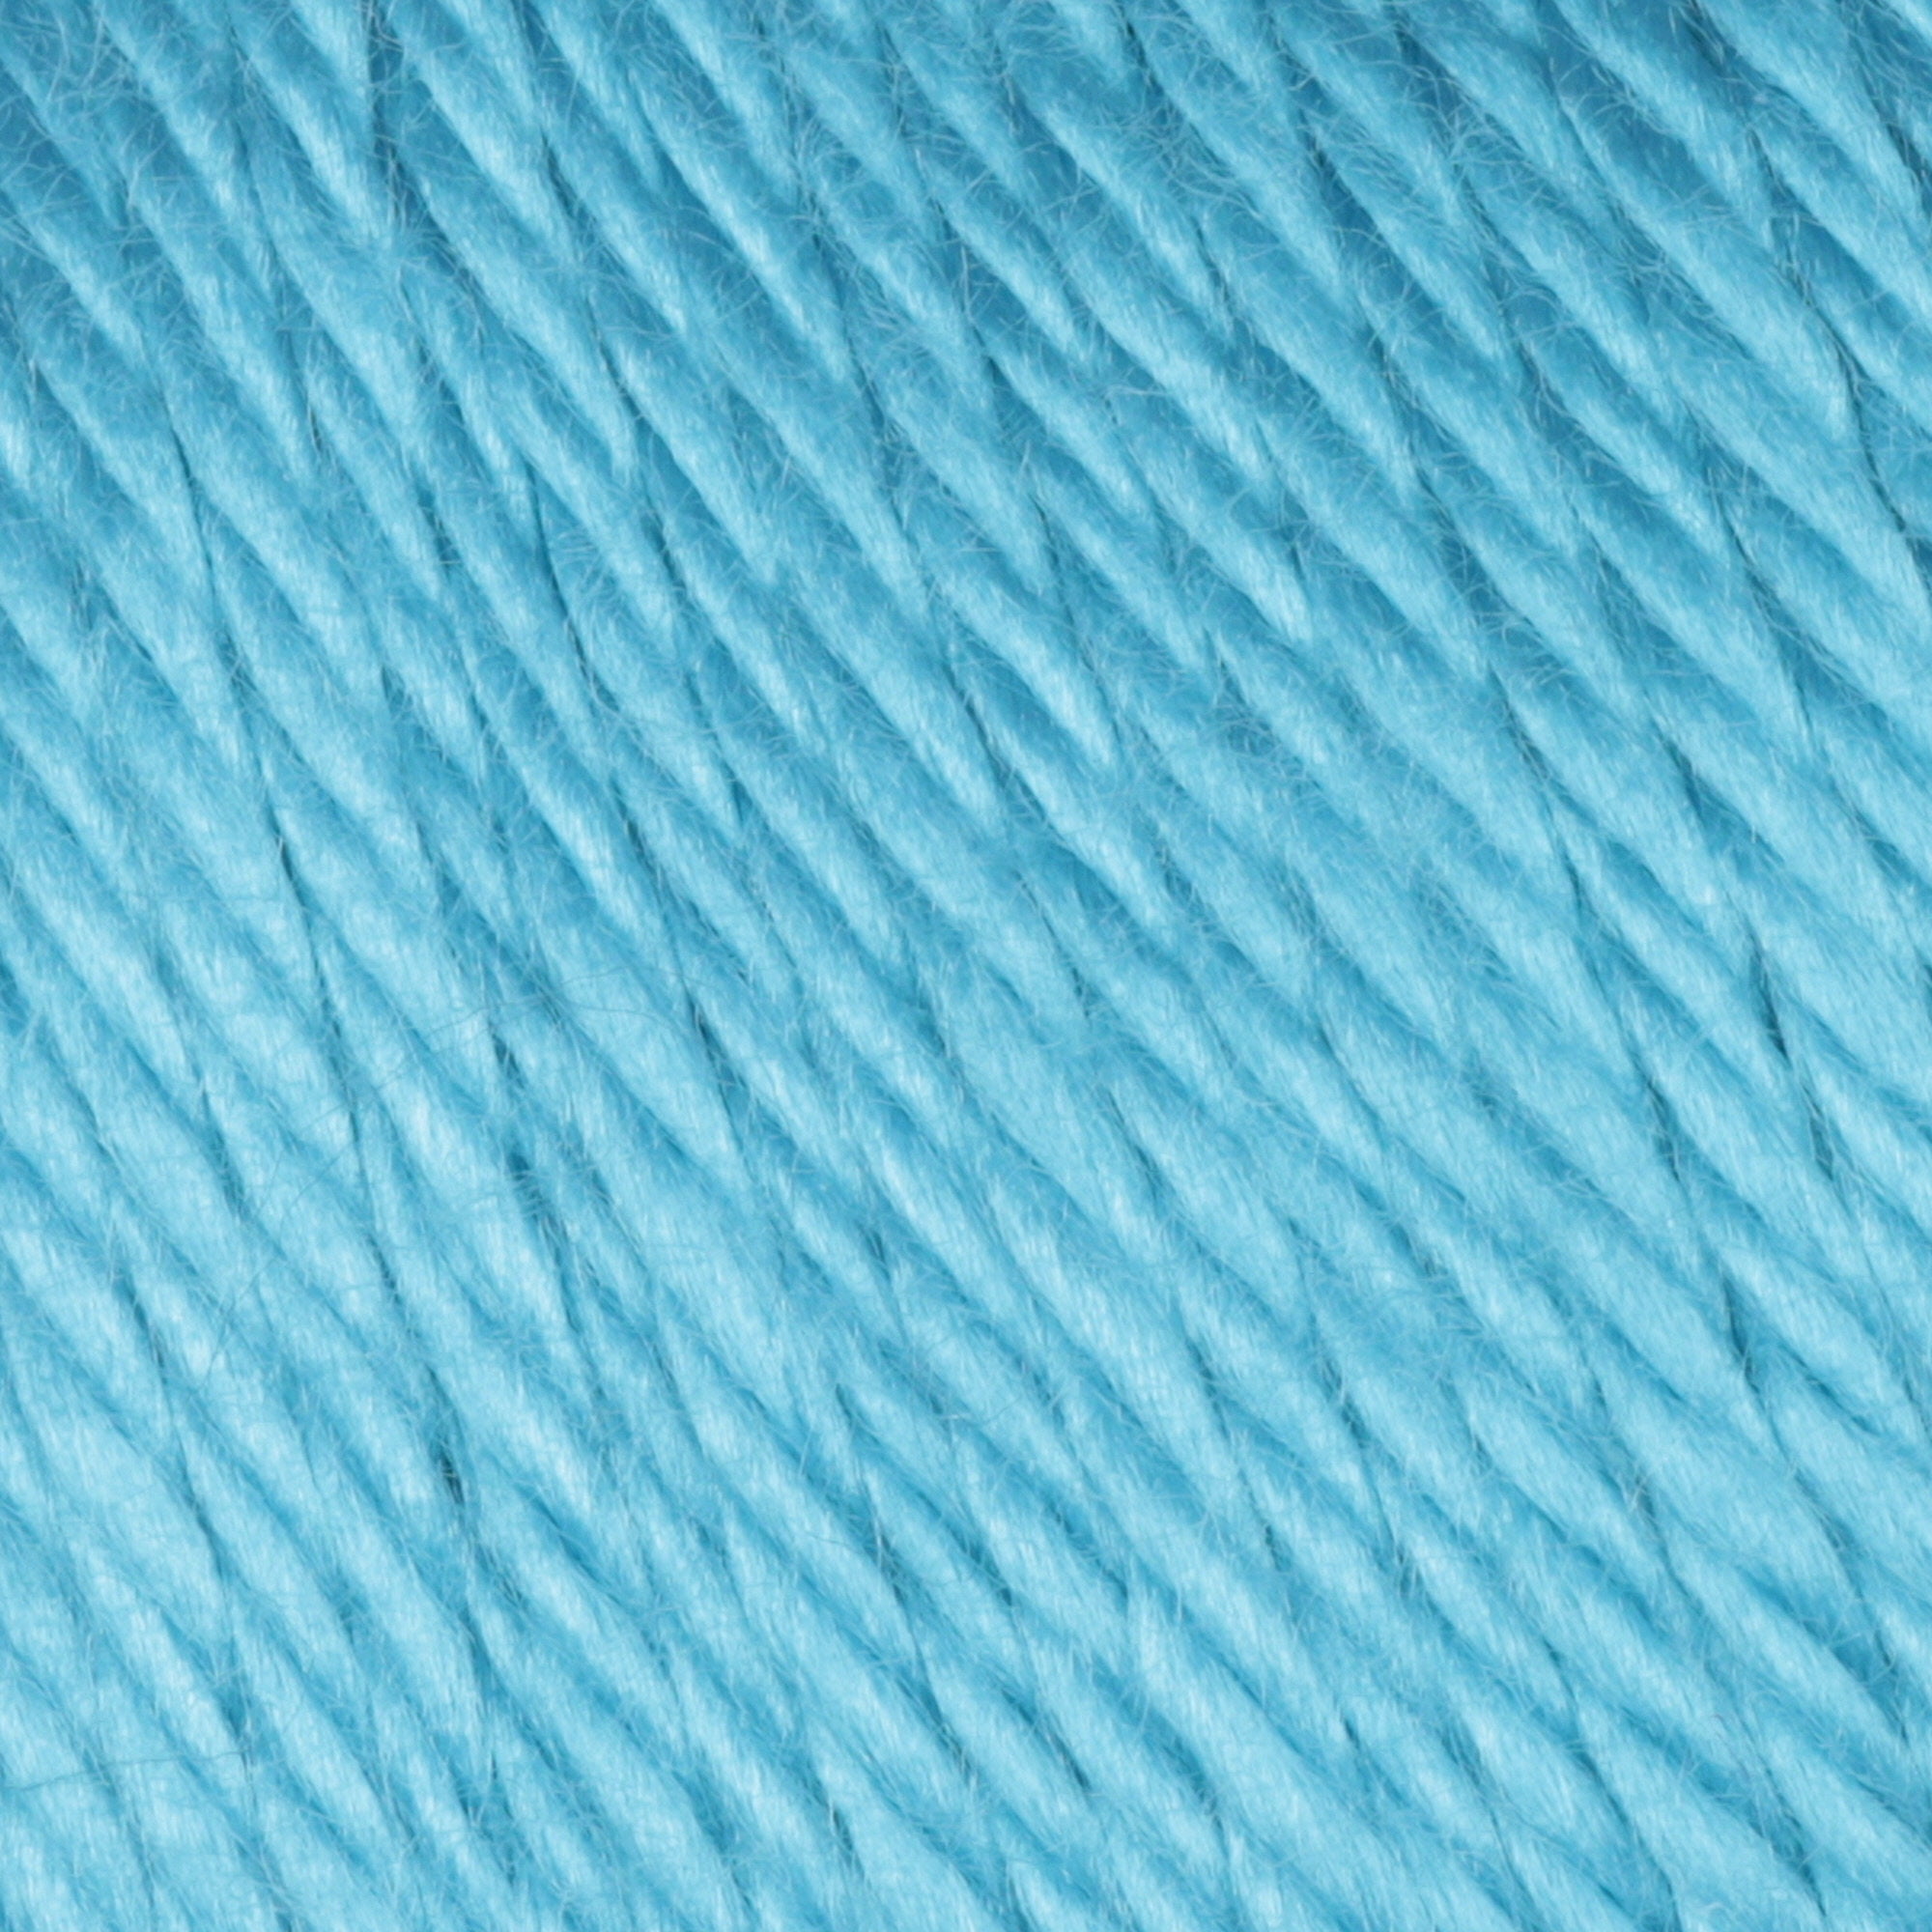  Caron Simply Soft Blue Mint Brites Yarn - 3 Pack of 170g/6oz -  Acrylic - 4 Medium (Worsted) - 315 Yards - Knitting, Crocheting & Crafts :  Everything Else